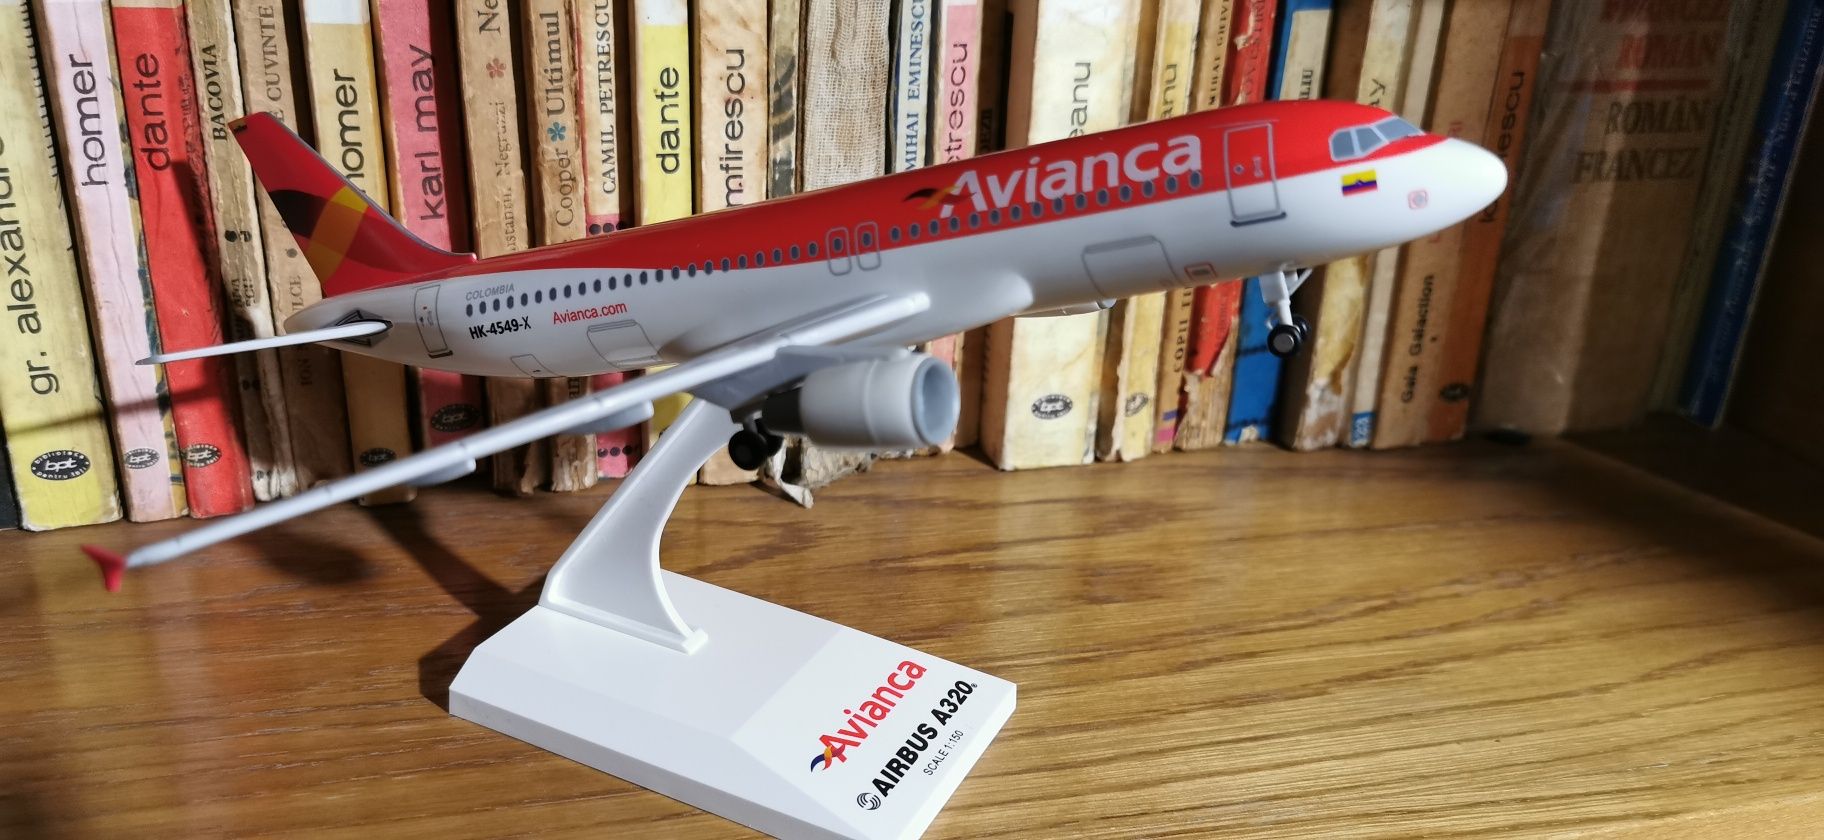 Avianca, Airbus A 320 scara 1:150